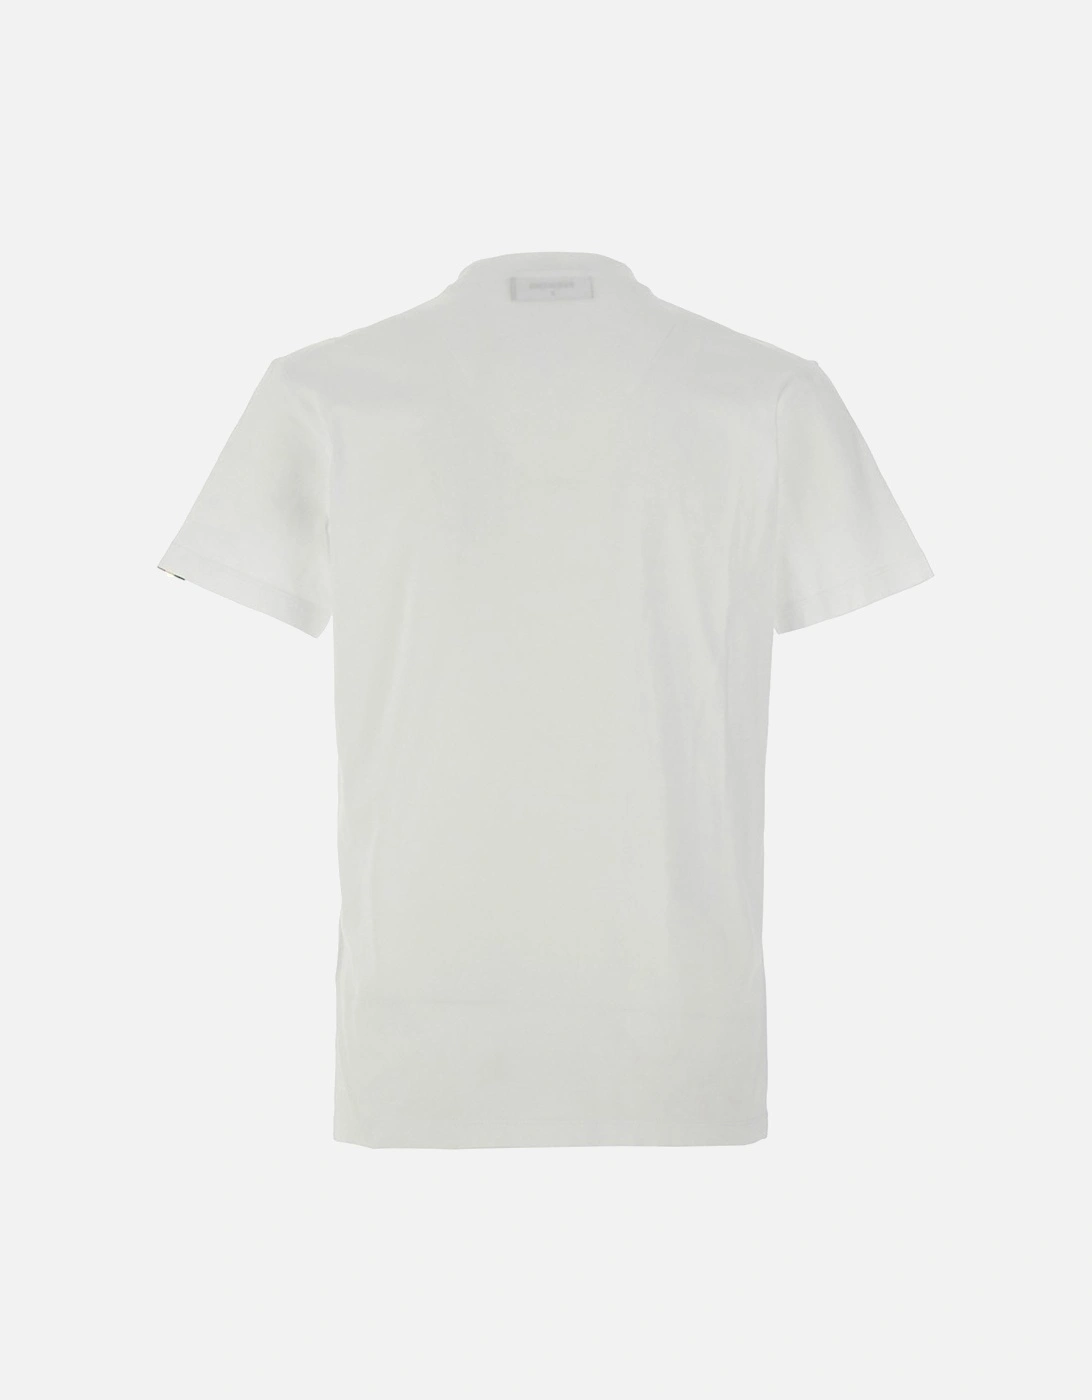 Mens Cool T-shirt White